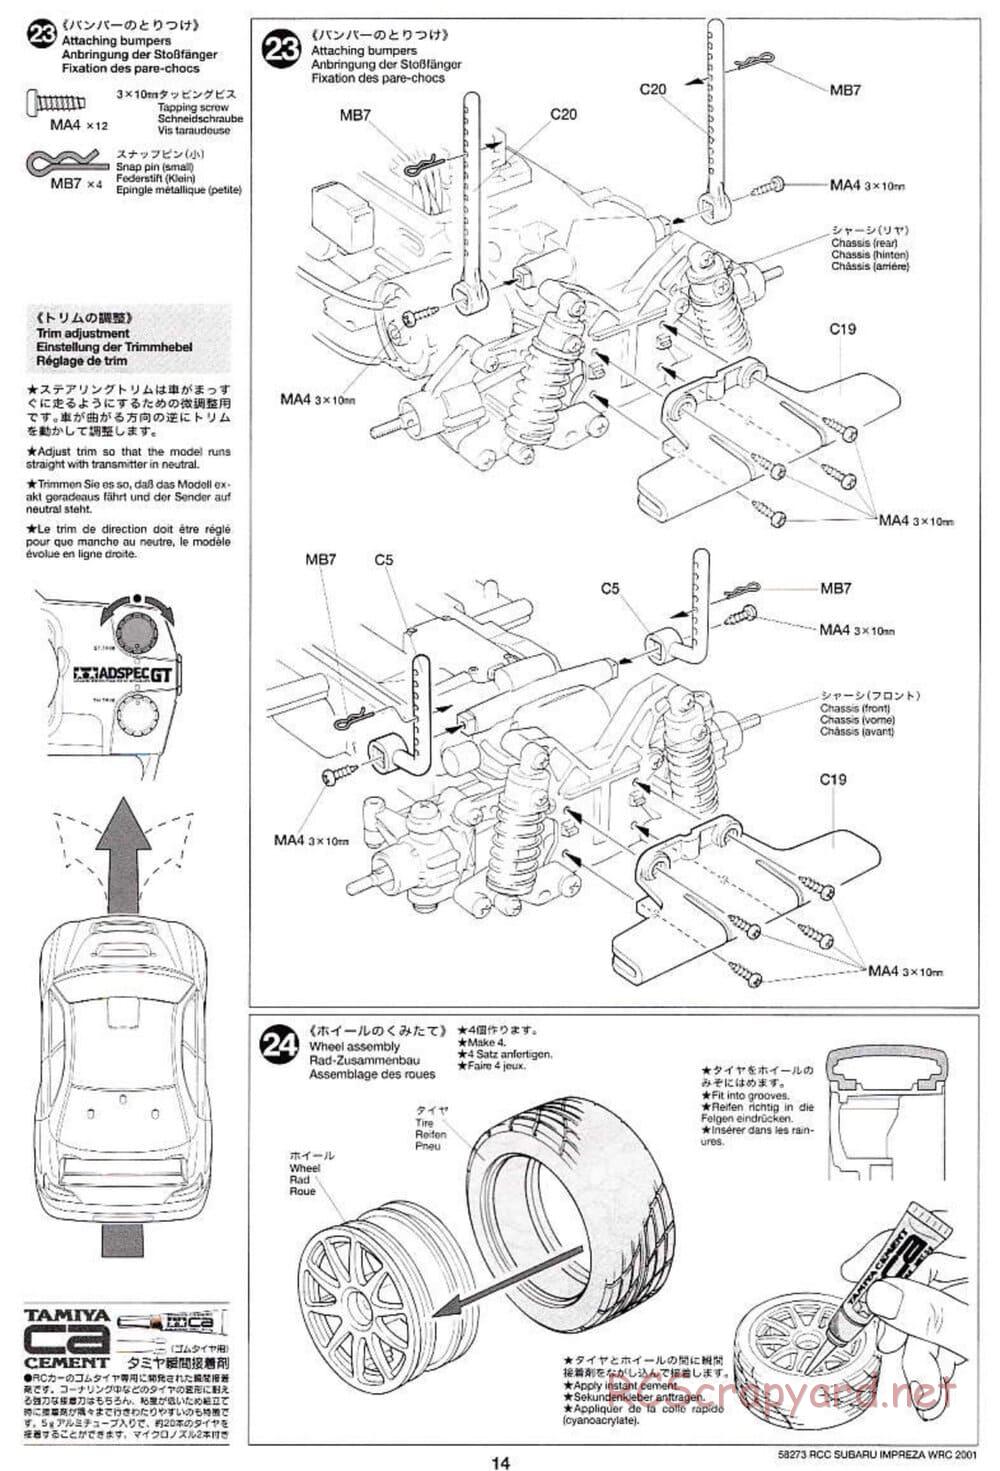 Tamiya - Subaru Impreza WRC 2001 - TL-01 Chassis - Manual - Page 14